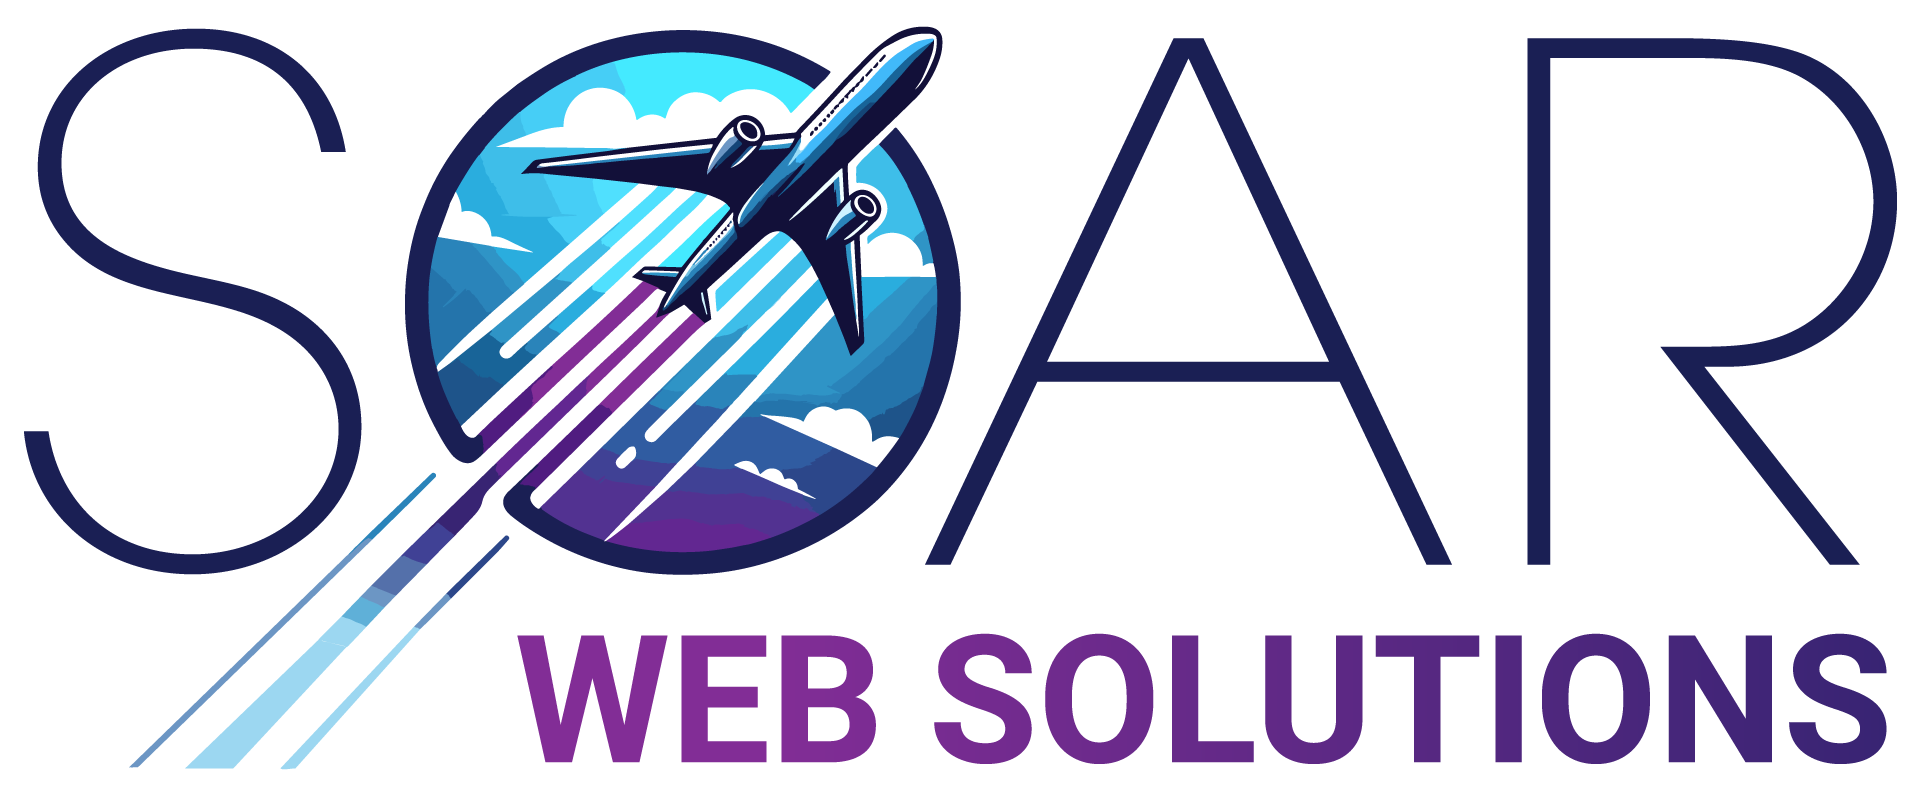 SOAR Web Solutions